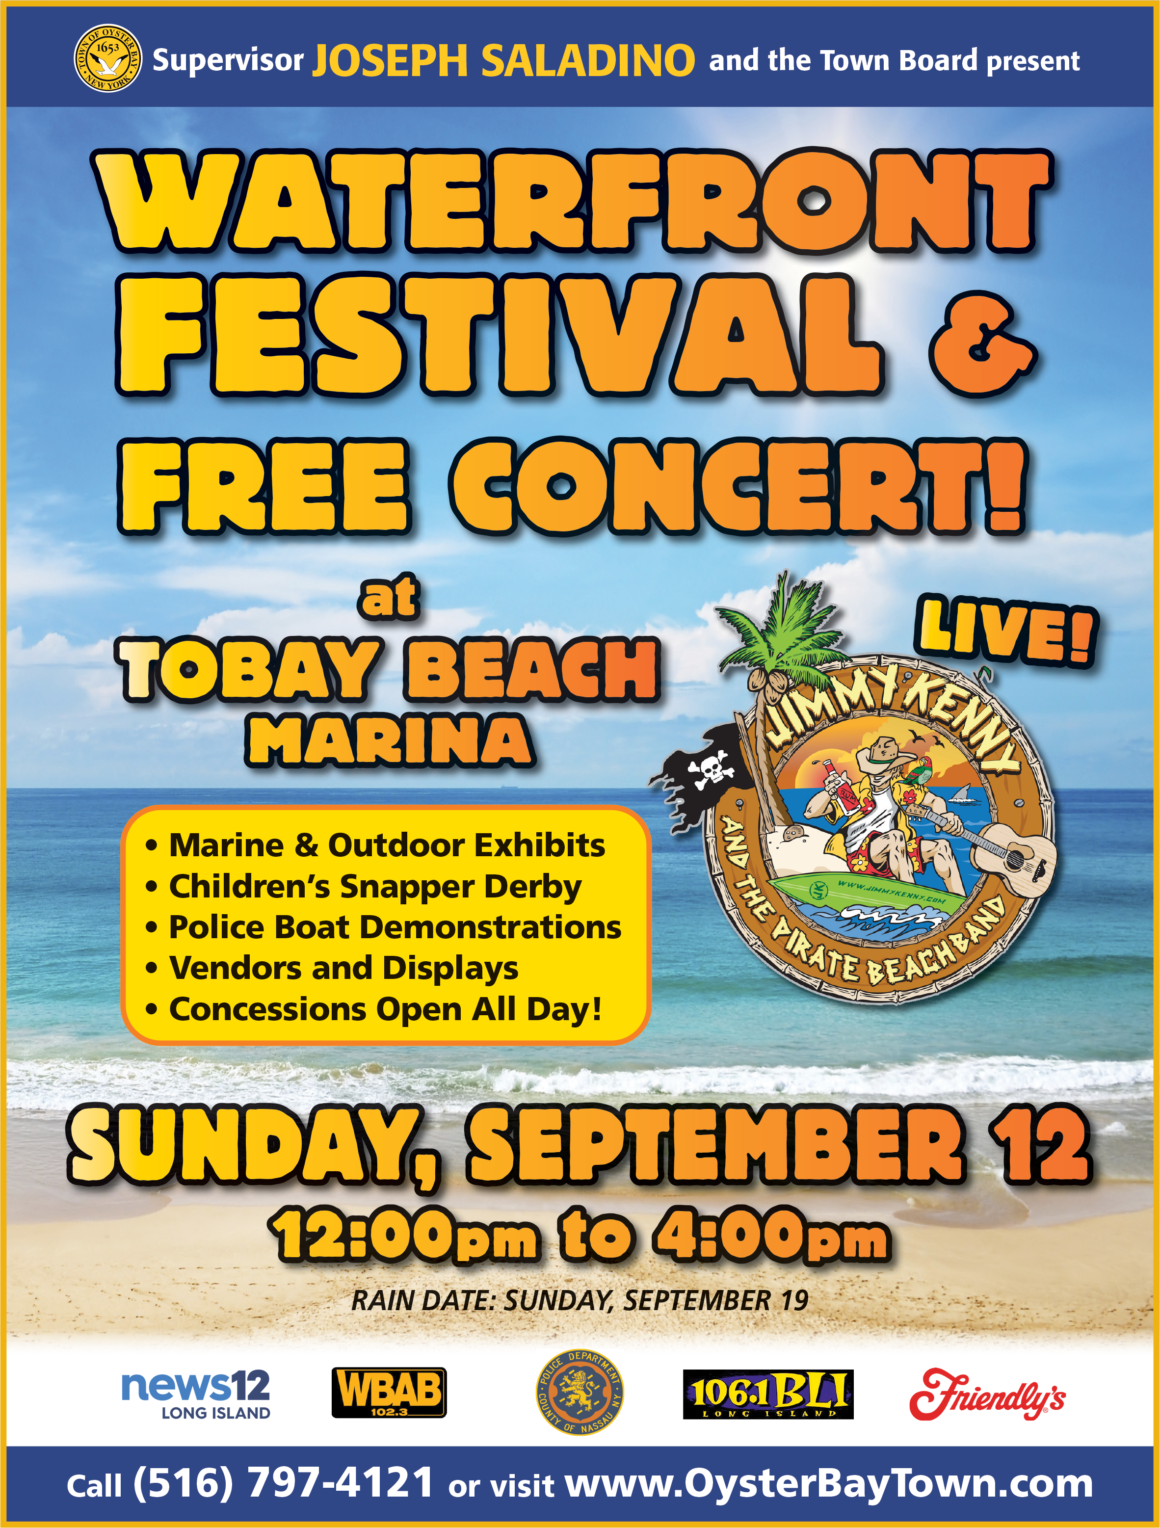 Saladino Announces Free Concert and Waterfront Festival at TOBAY Beach Marina